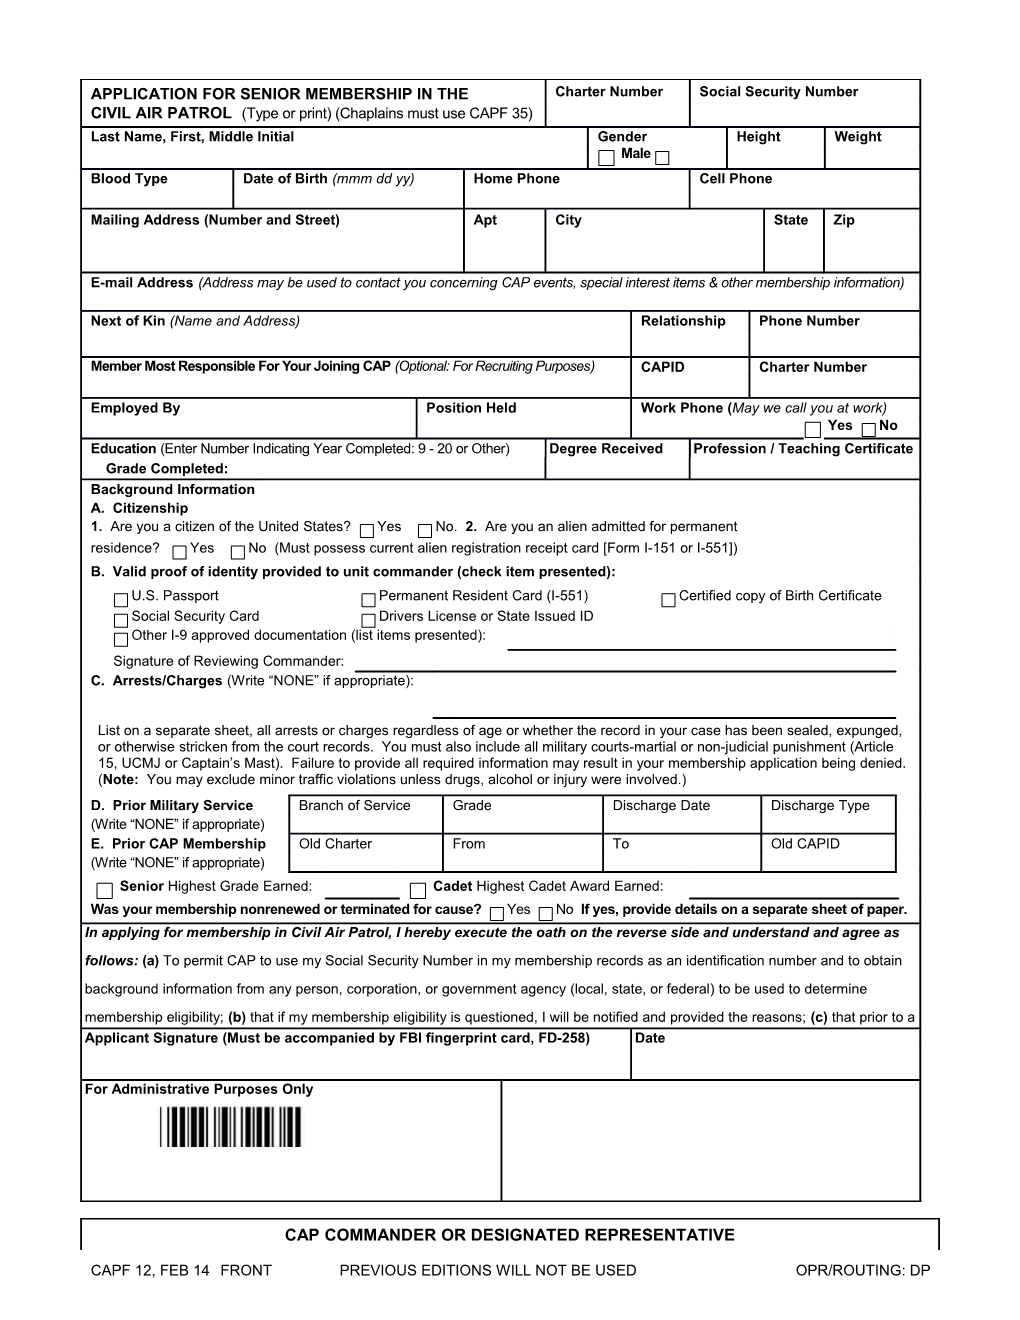 CAP Form 12 - Senior Member Application